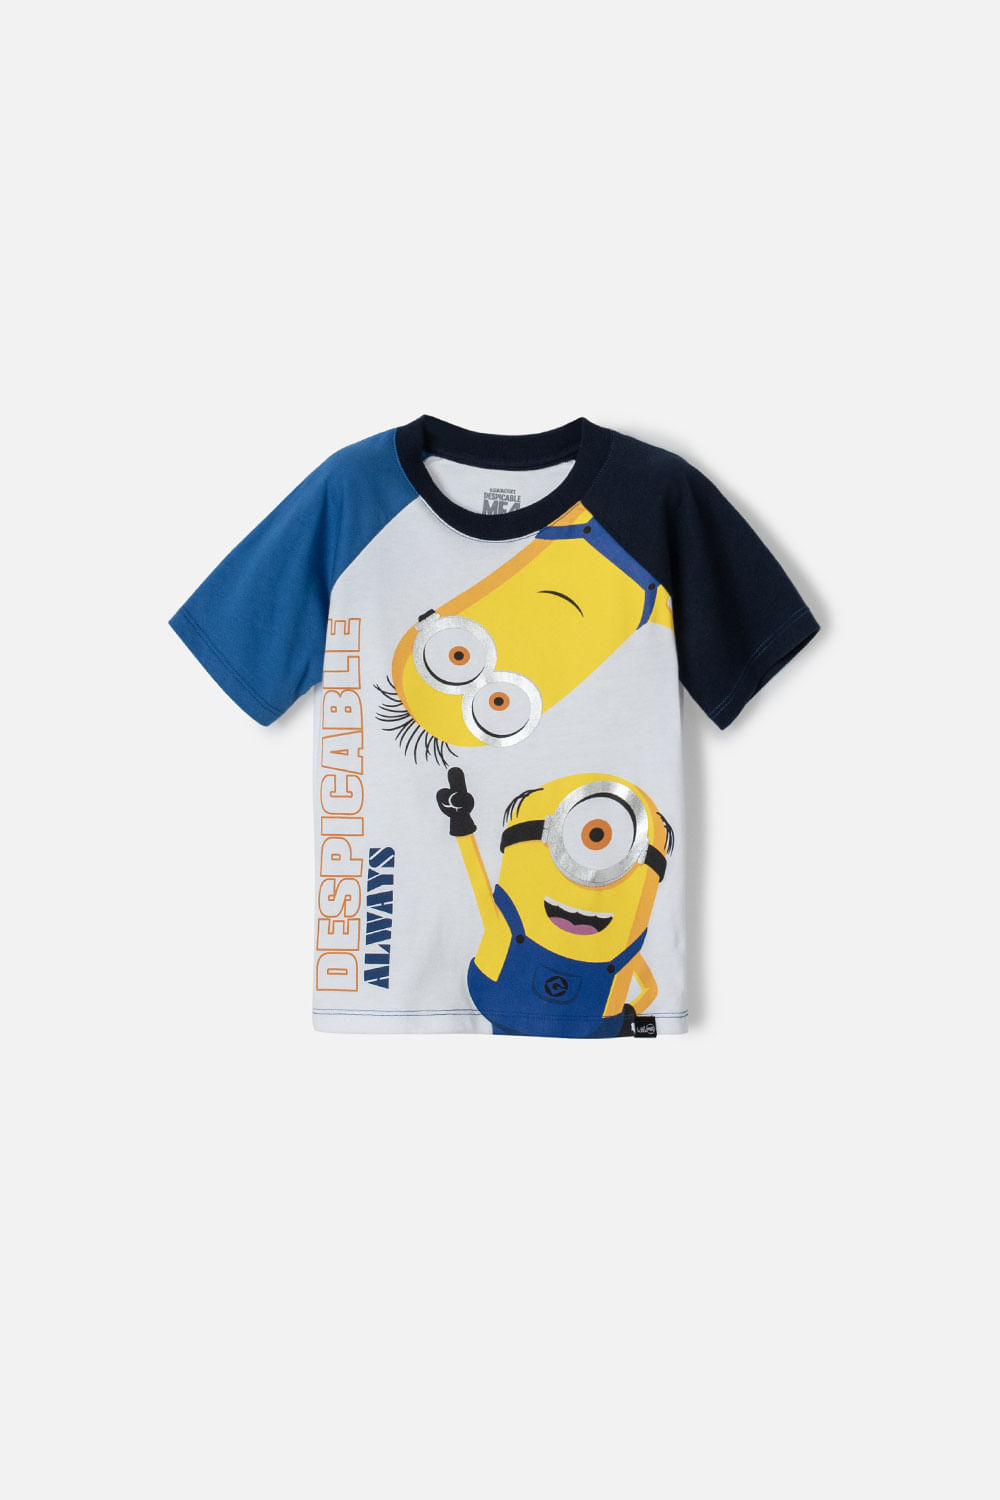 Camiseta de  Minions multicolor manga corta para niño 2T a 5T 3T-0